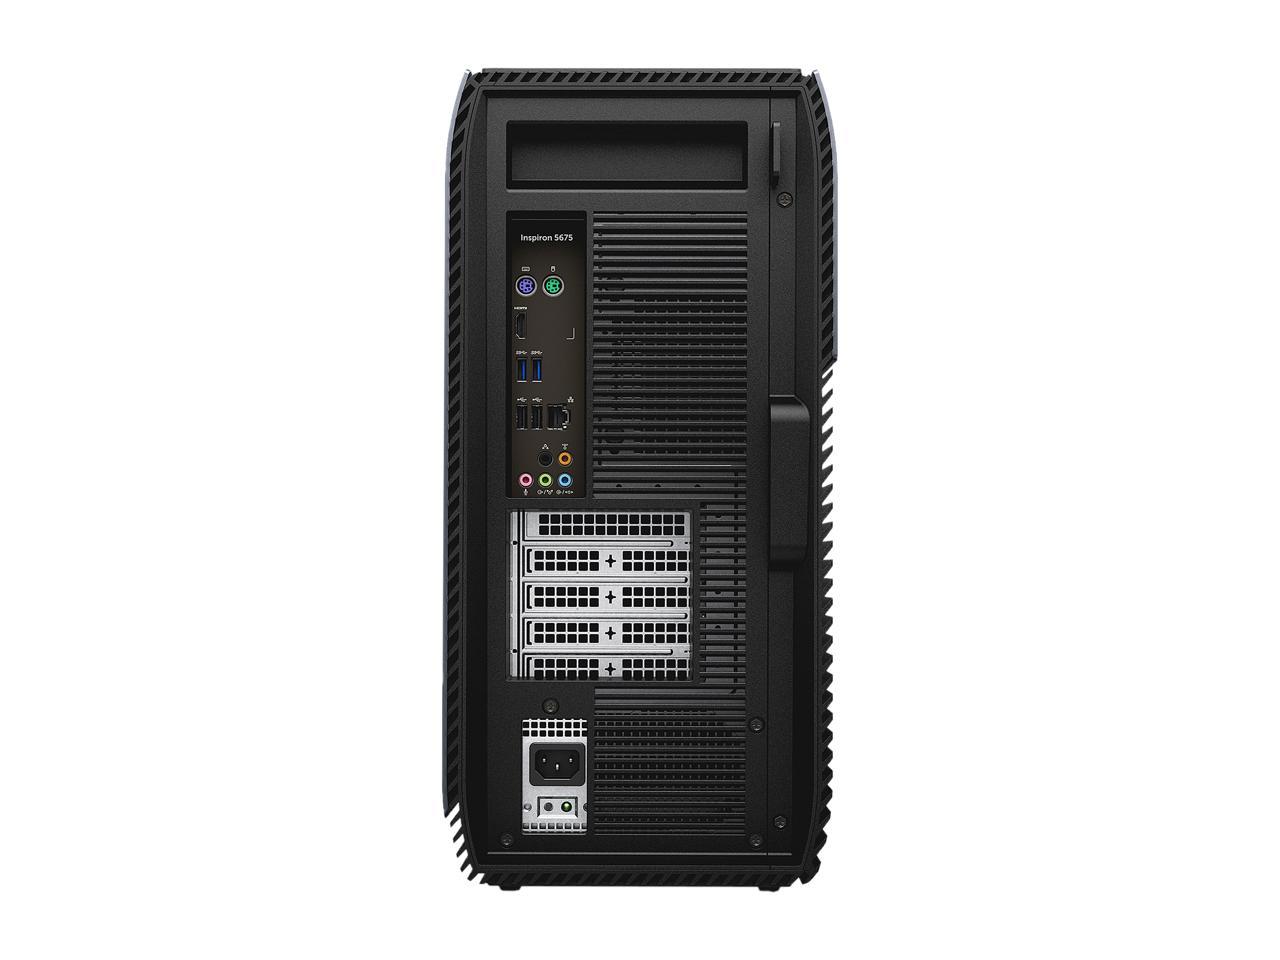 Dell Desktop Computer Inspiron 5675 I5675 A128blu Pus Ryzen 7 1700x 3